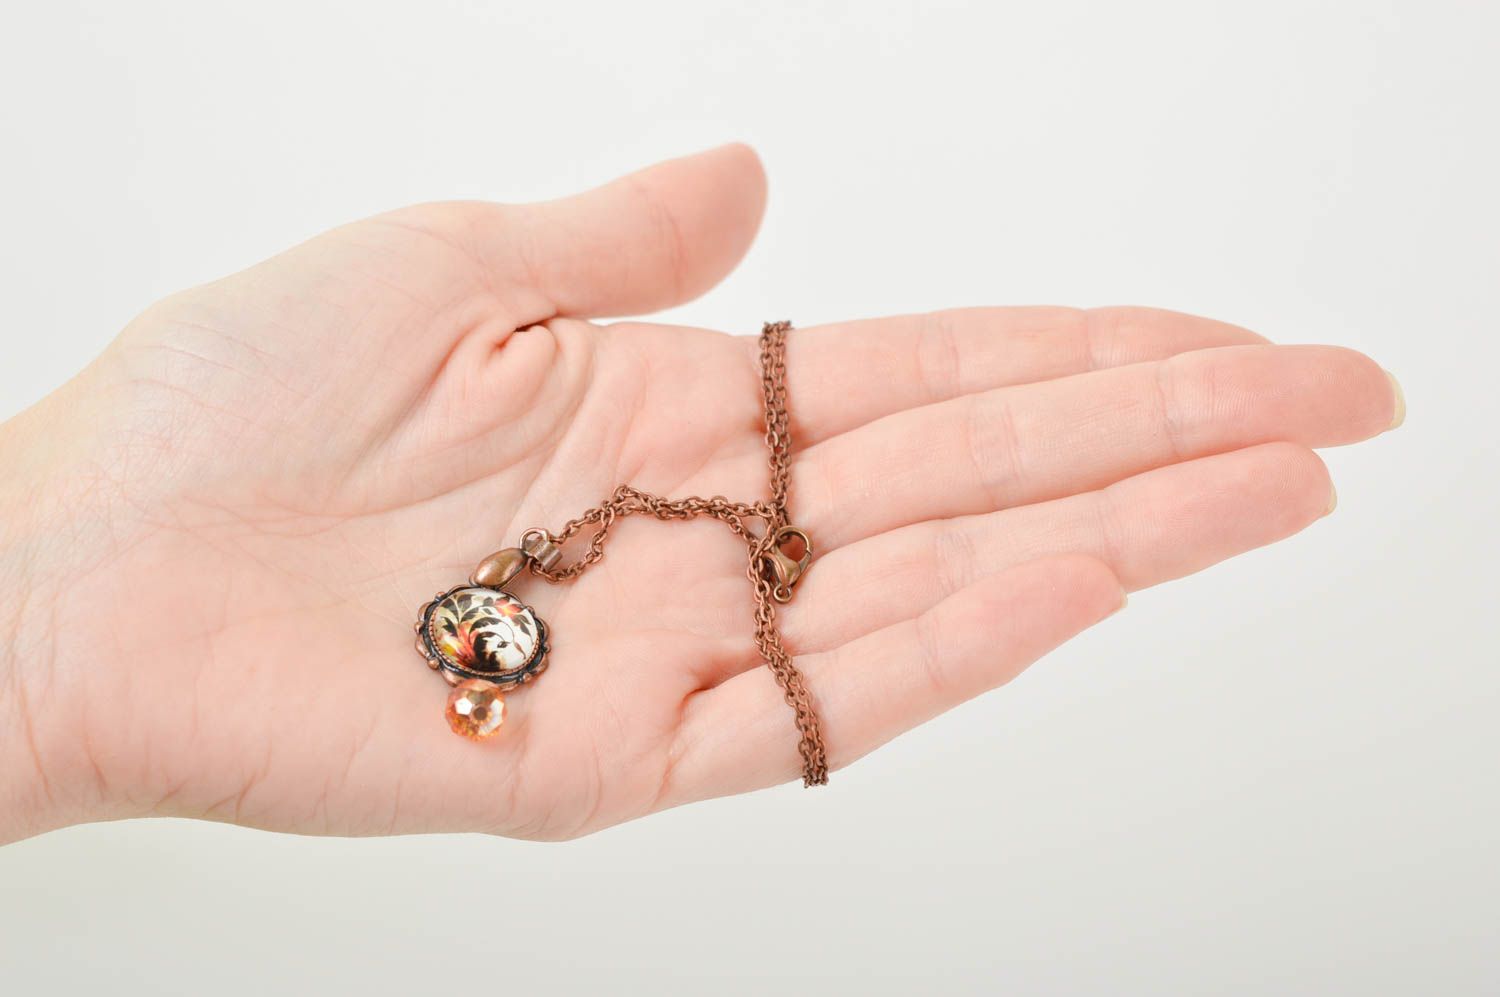 Small handmade beaded pendant metal pendant on chain artisan jewelry designs photo 5